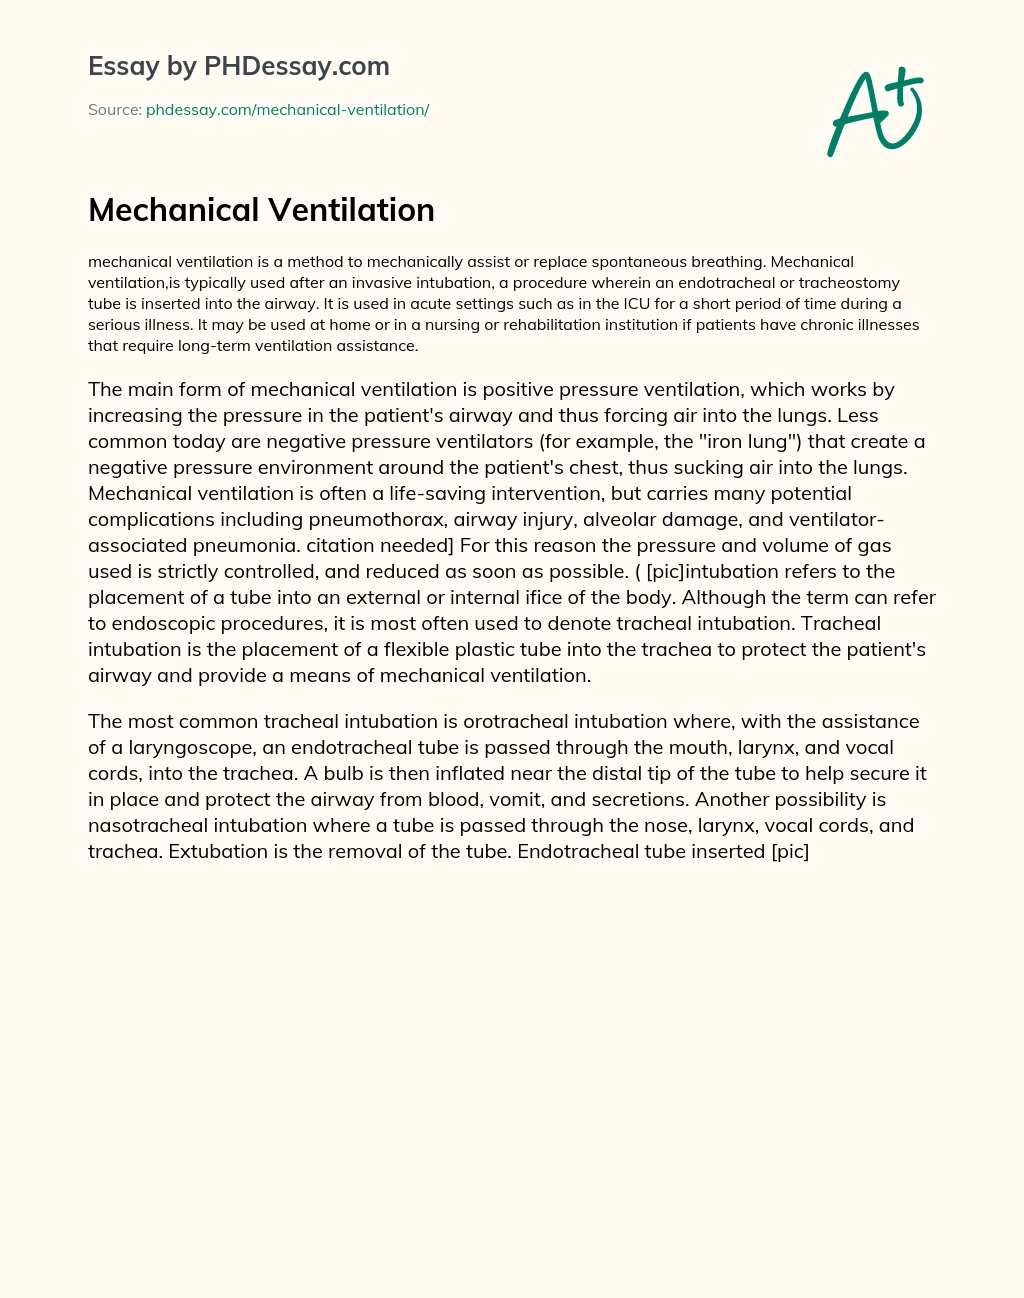 Mechanical Ventilation essay